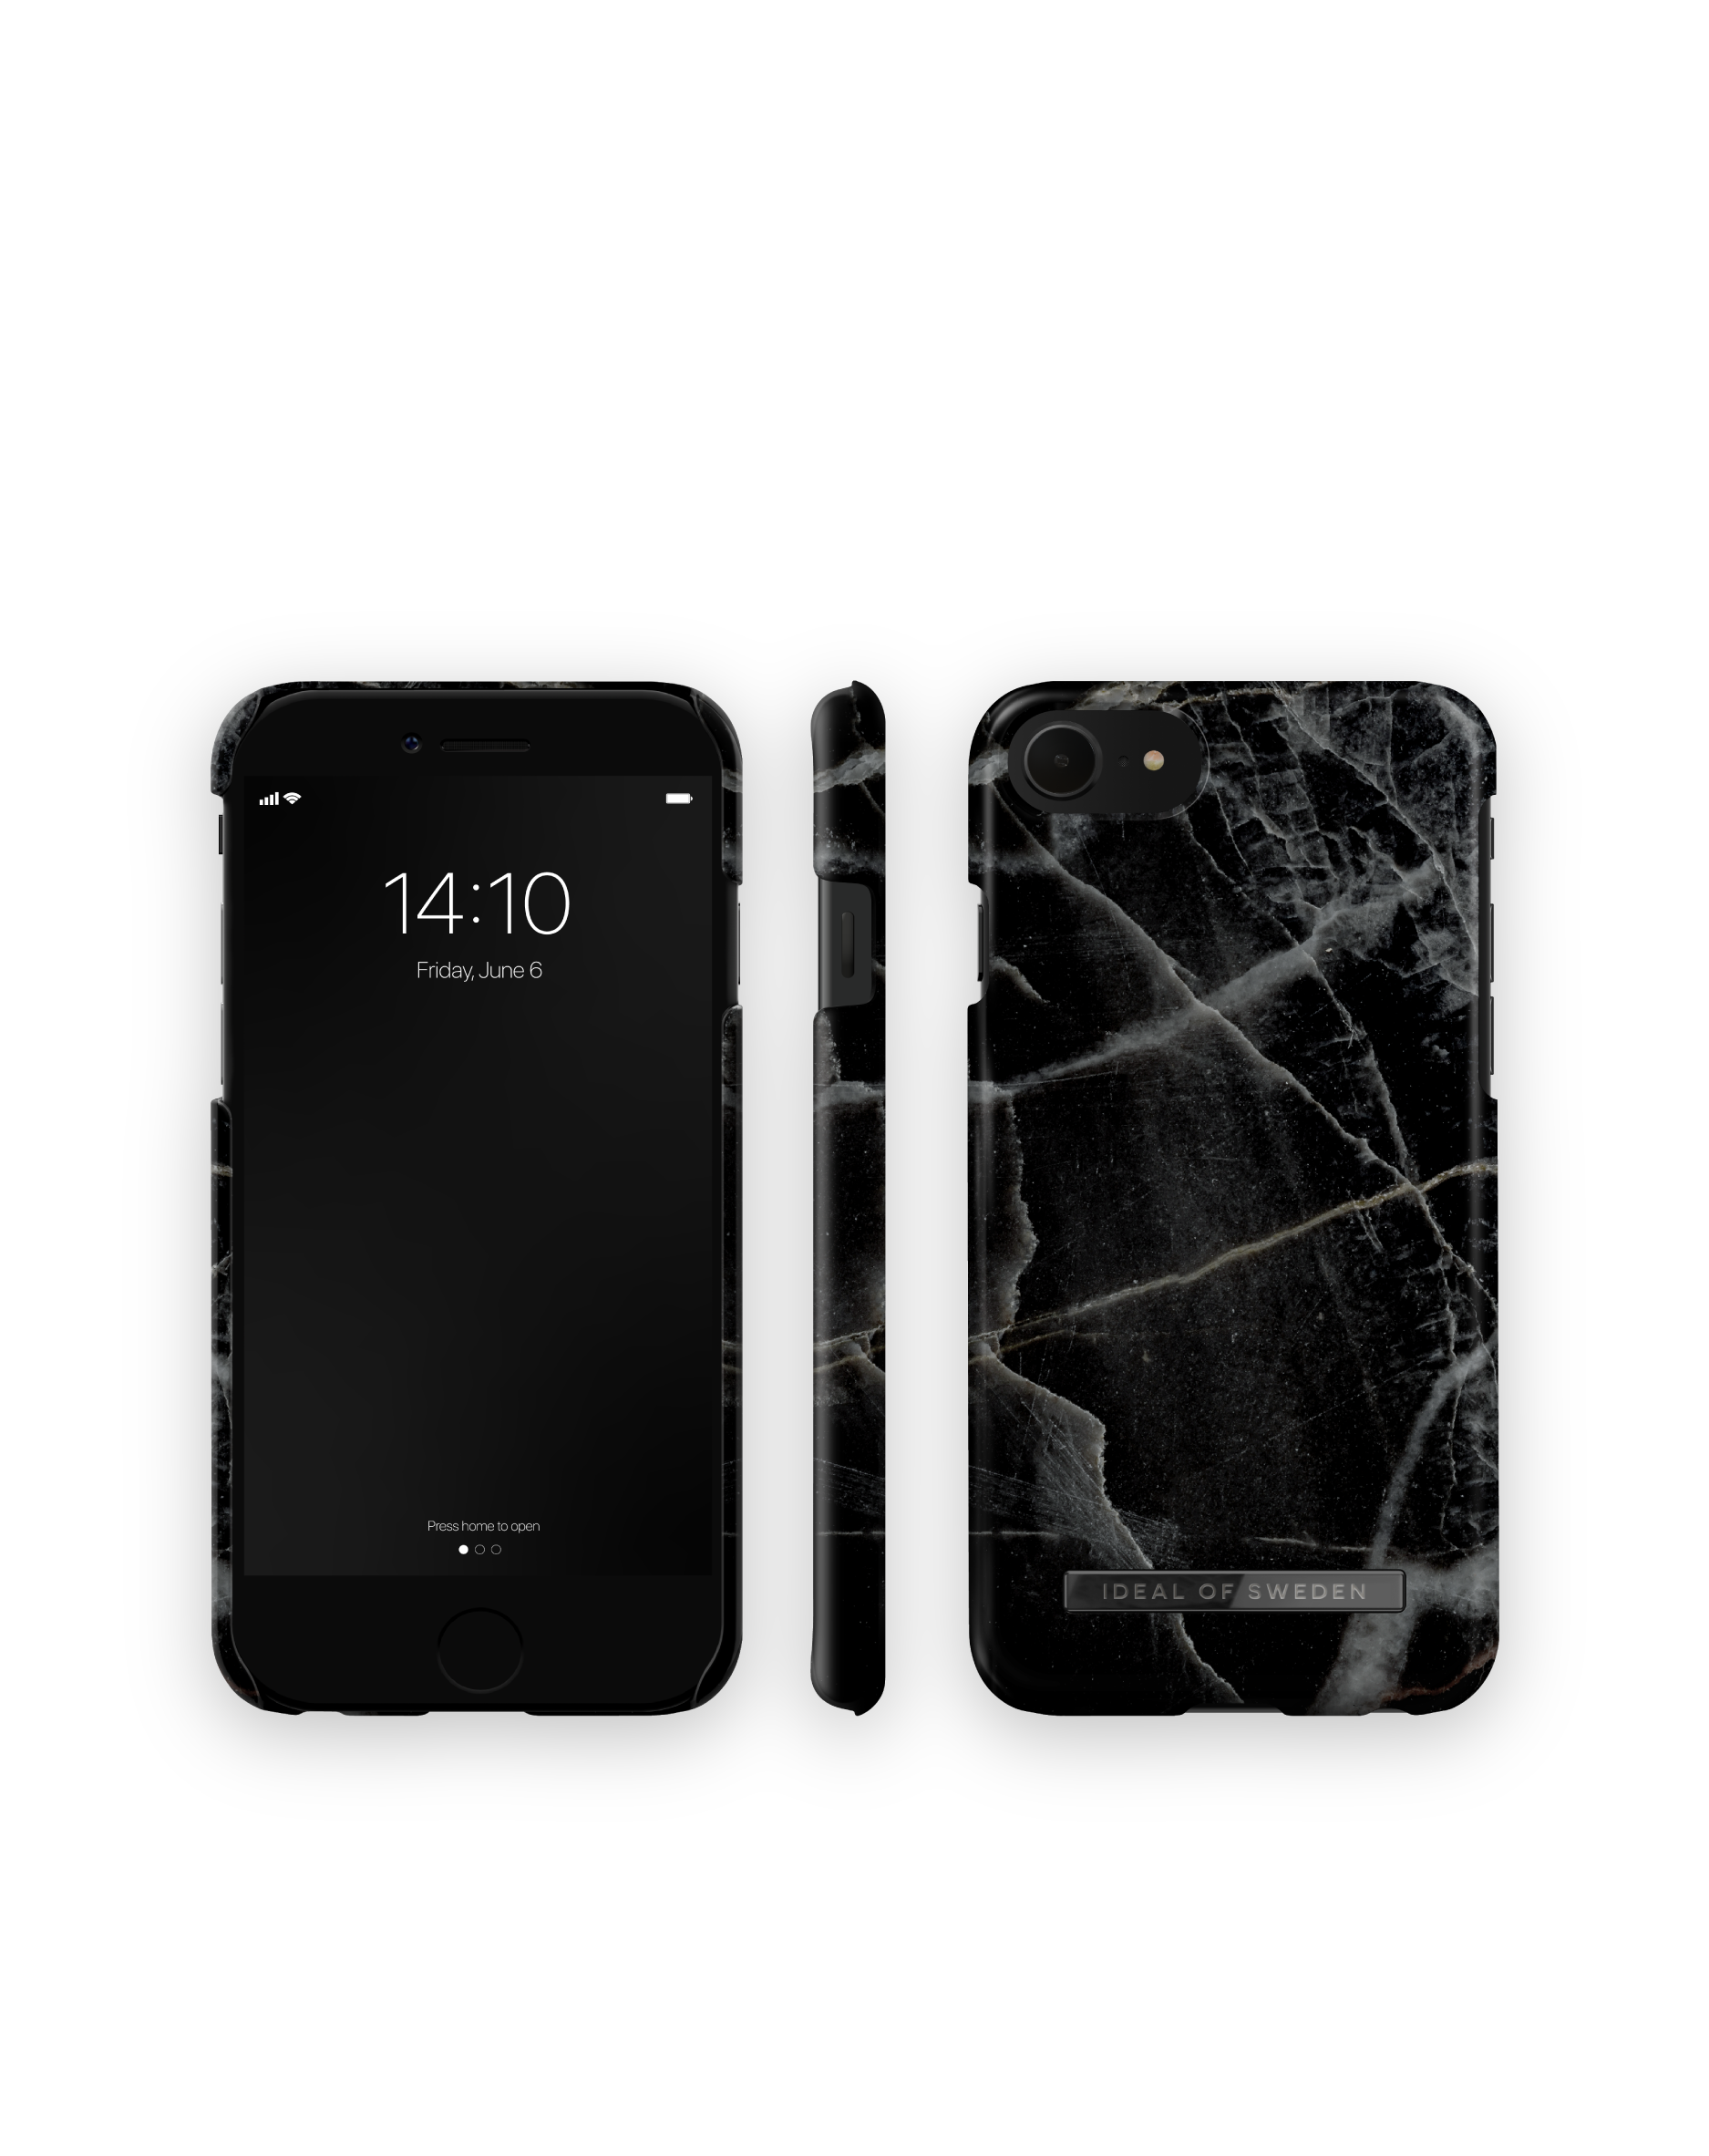 Black iPhone IDFCAW21-I7-358, Thunder Marble Apple, 8/7/6/6s/SE, IDEAL SWEDEN Backcover, OF